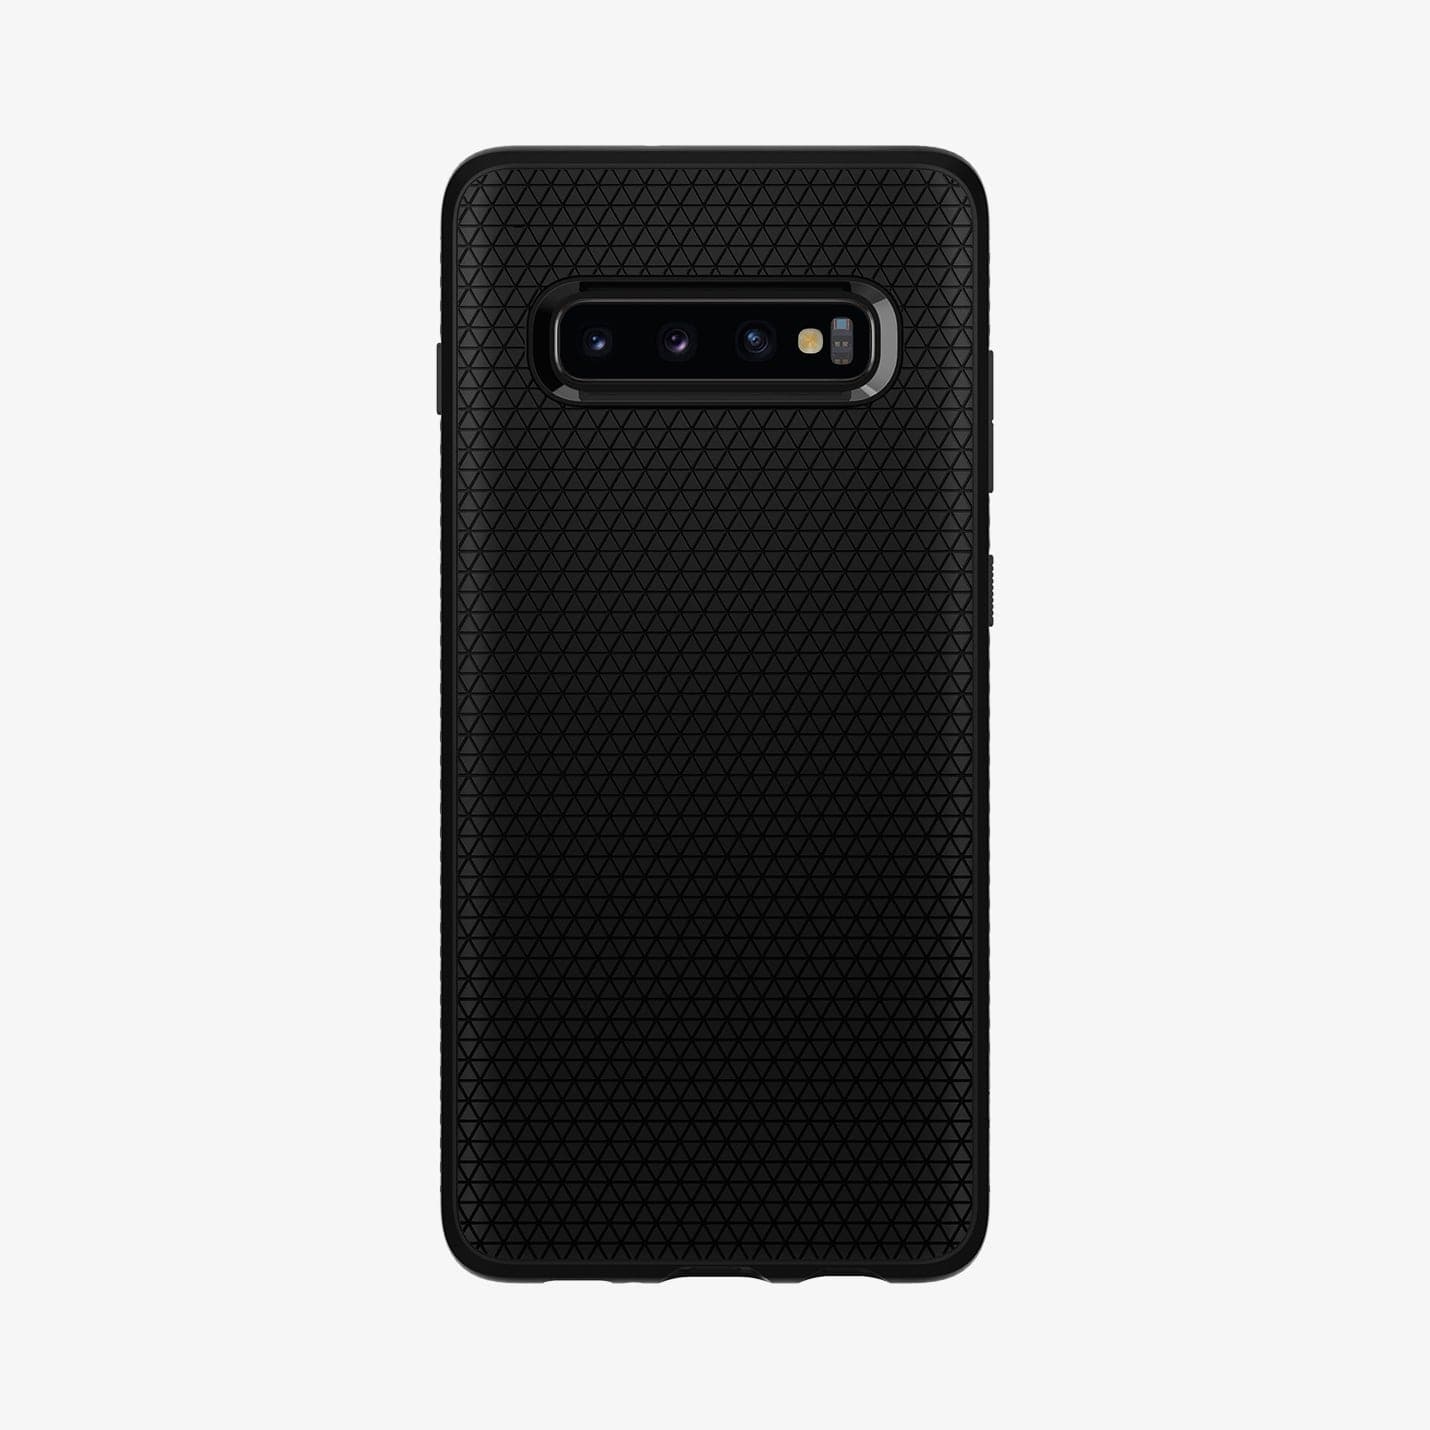 606CS25764 - Galaxy S10 Plus Liquid Air Case in black showing the back